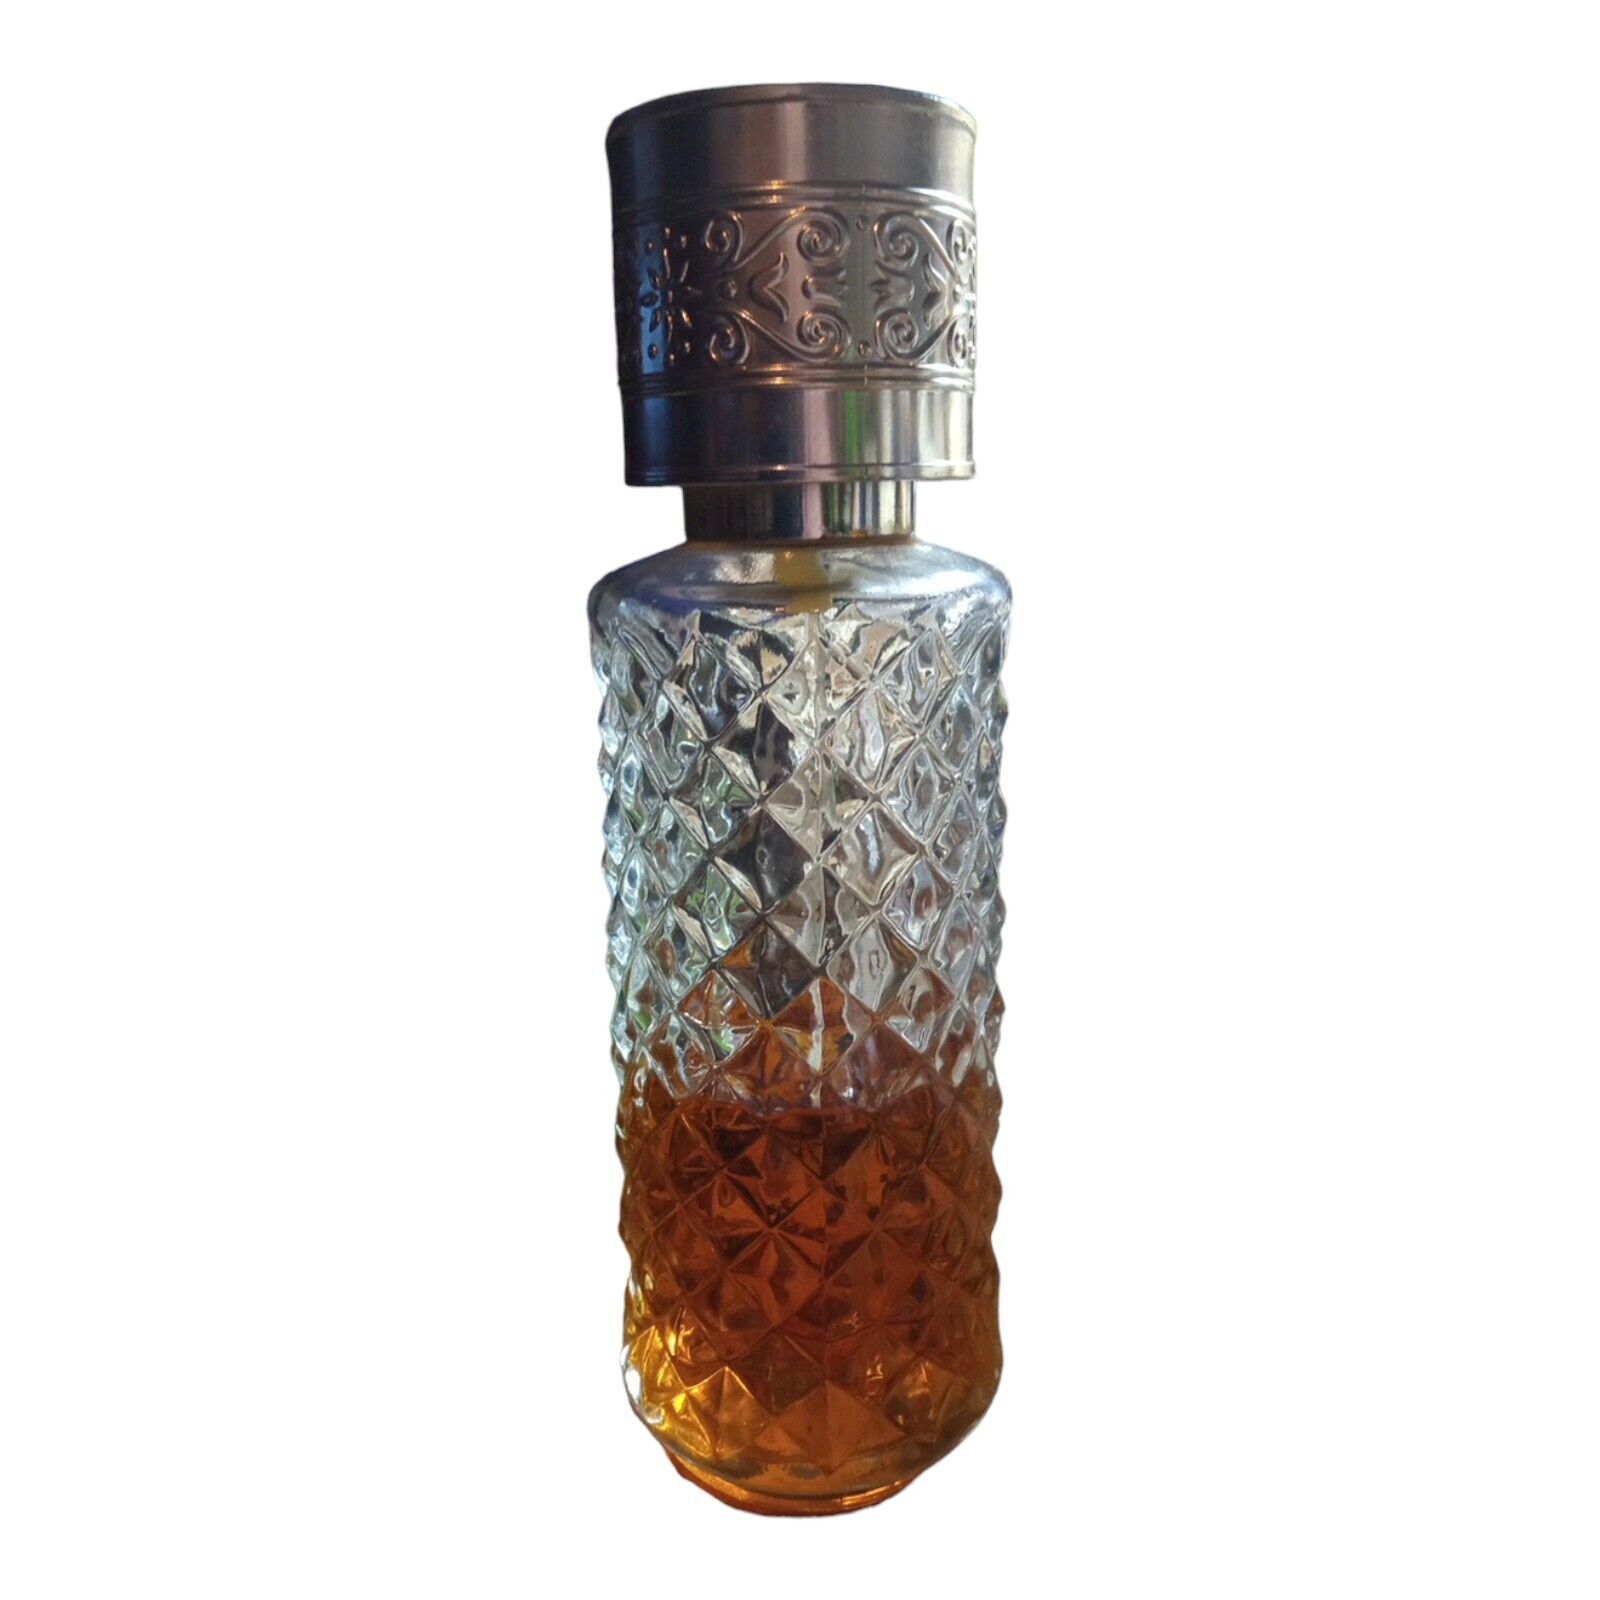 Intimate by Revlon Vintage EDT Eau de Toilette Spray 45% Full, Cut Glass Bottle